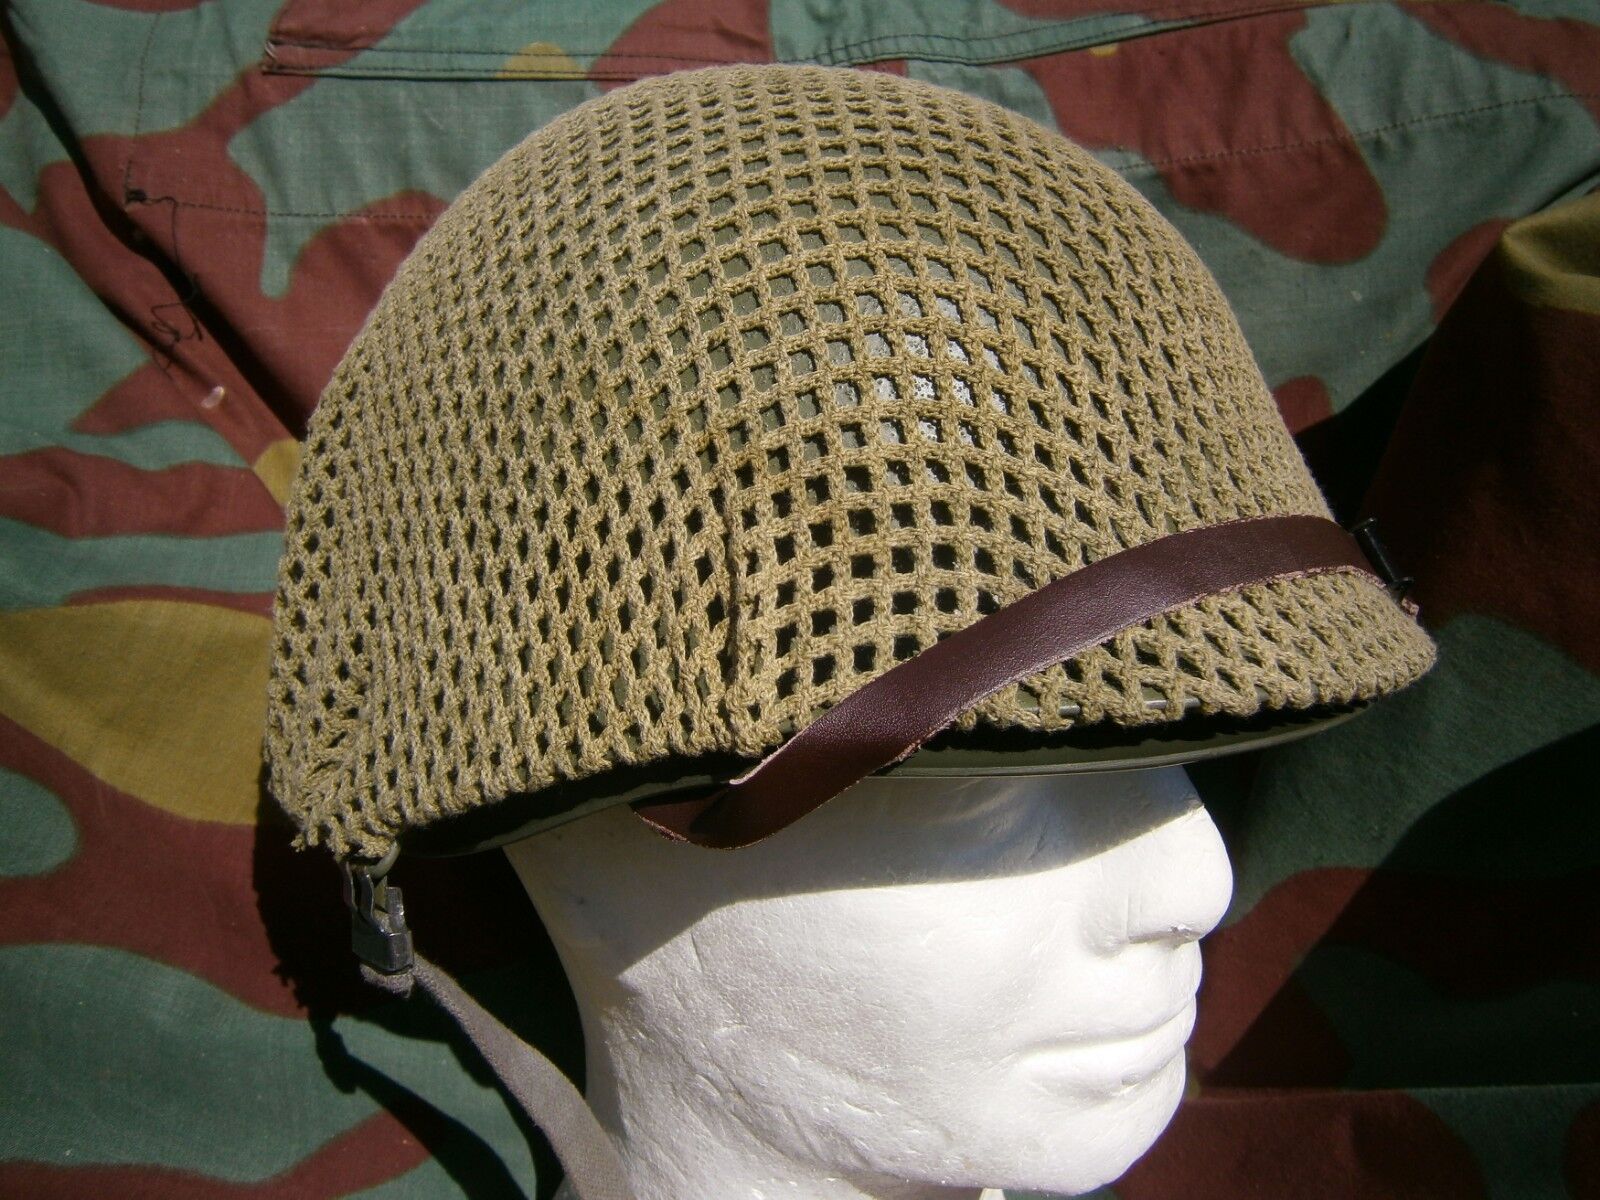 Net Camouflage Helmet M1 Drape Camouflage, Ww2 Us Helmet Cover Net